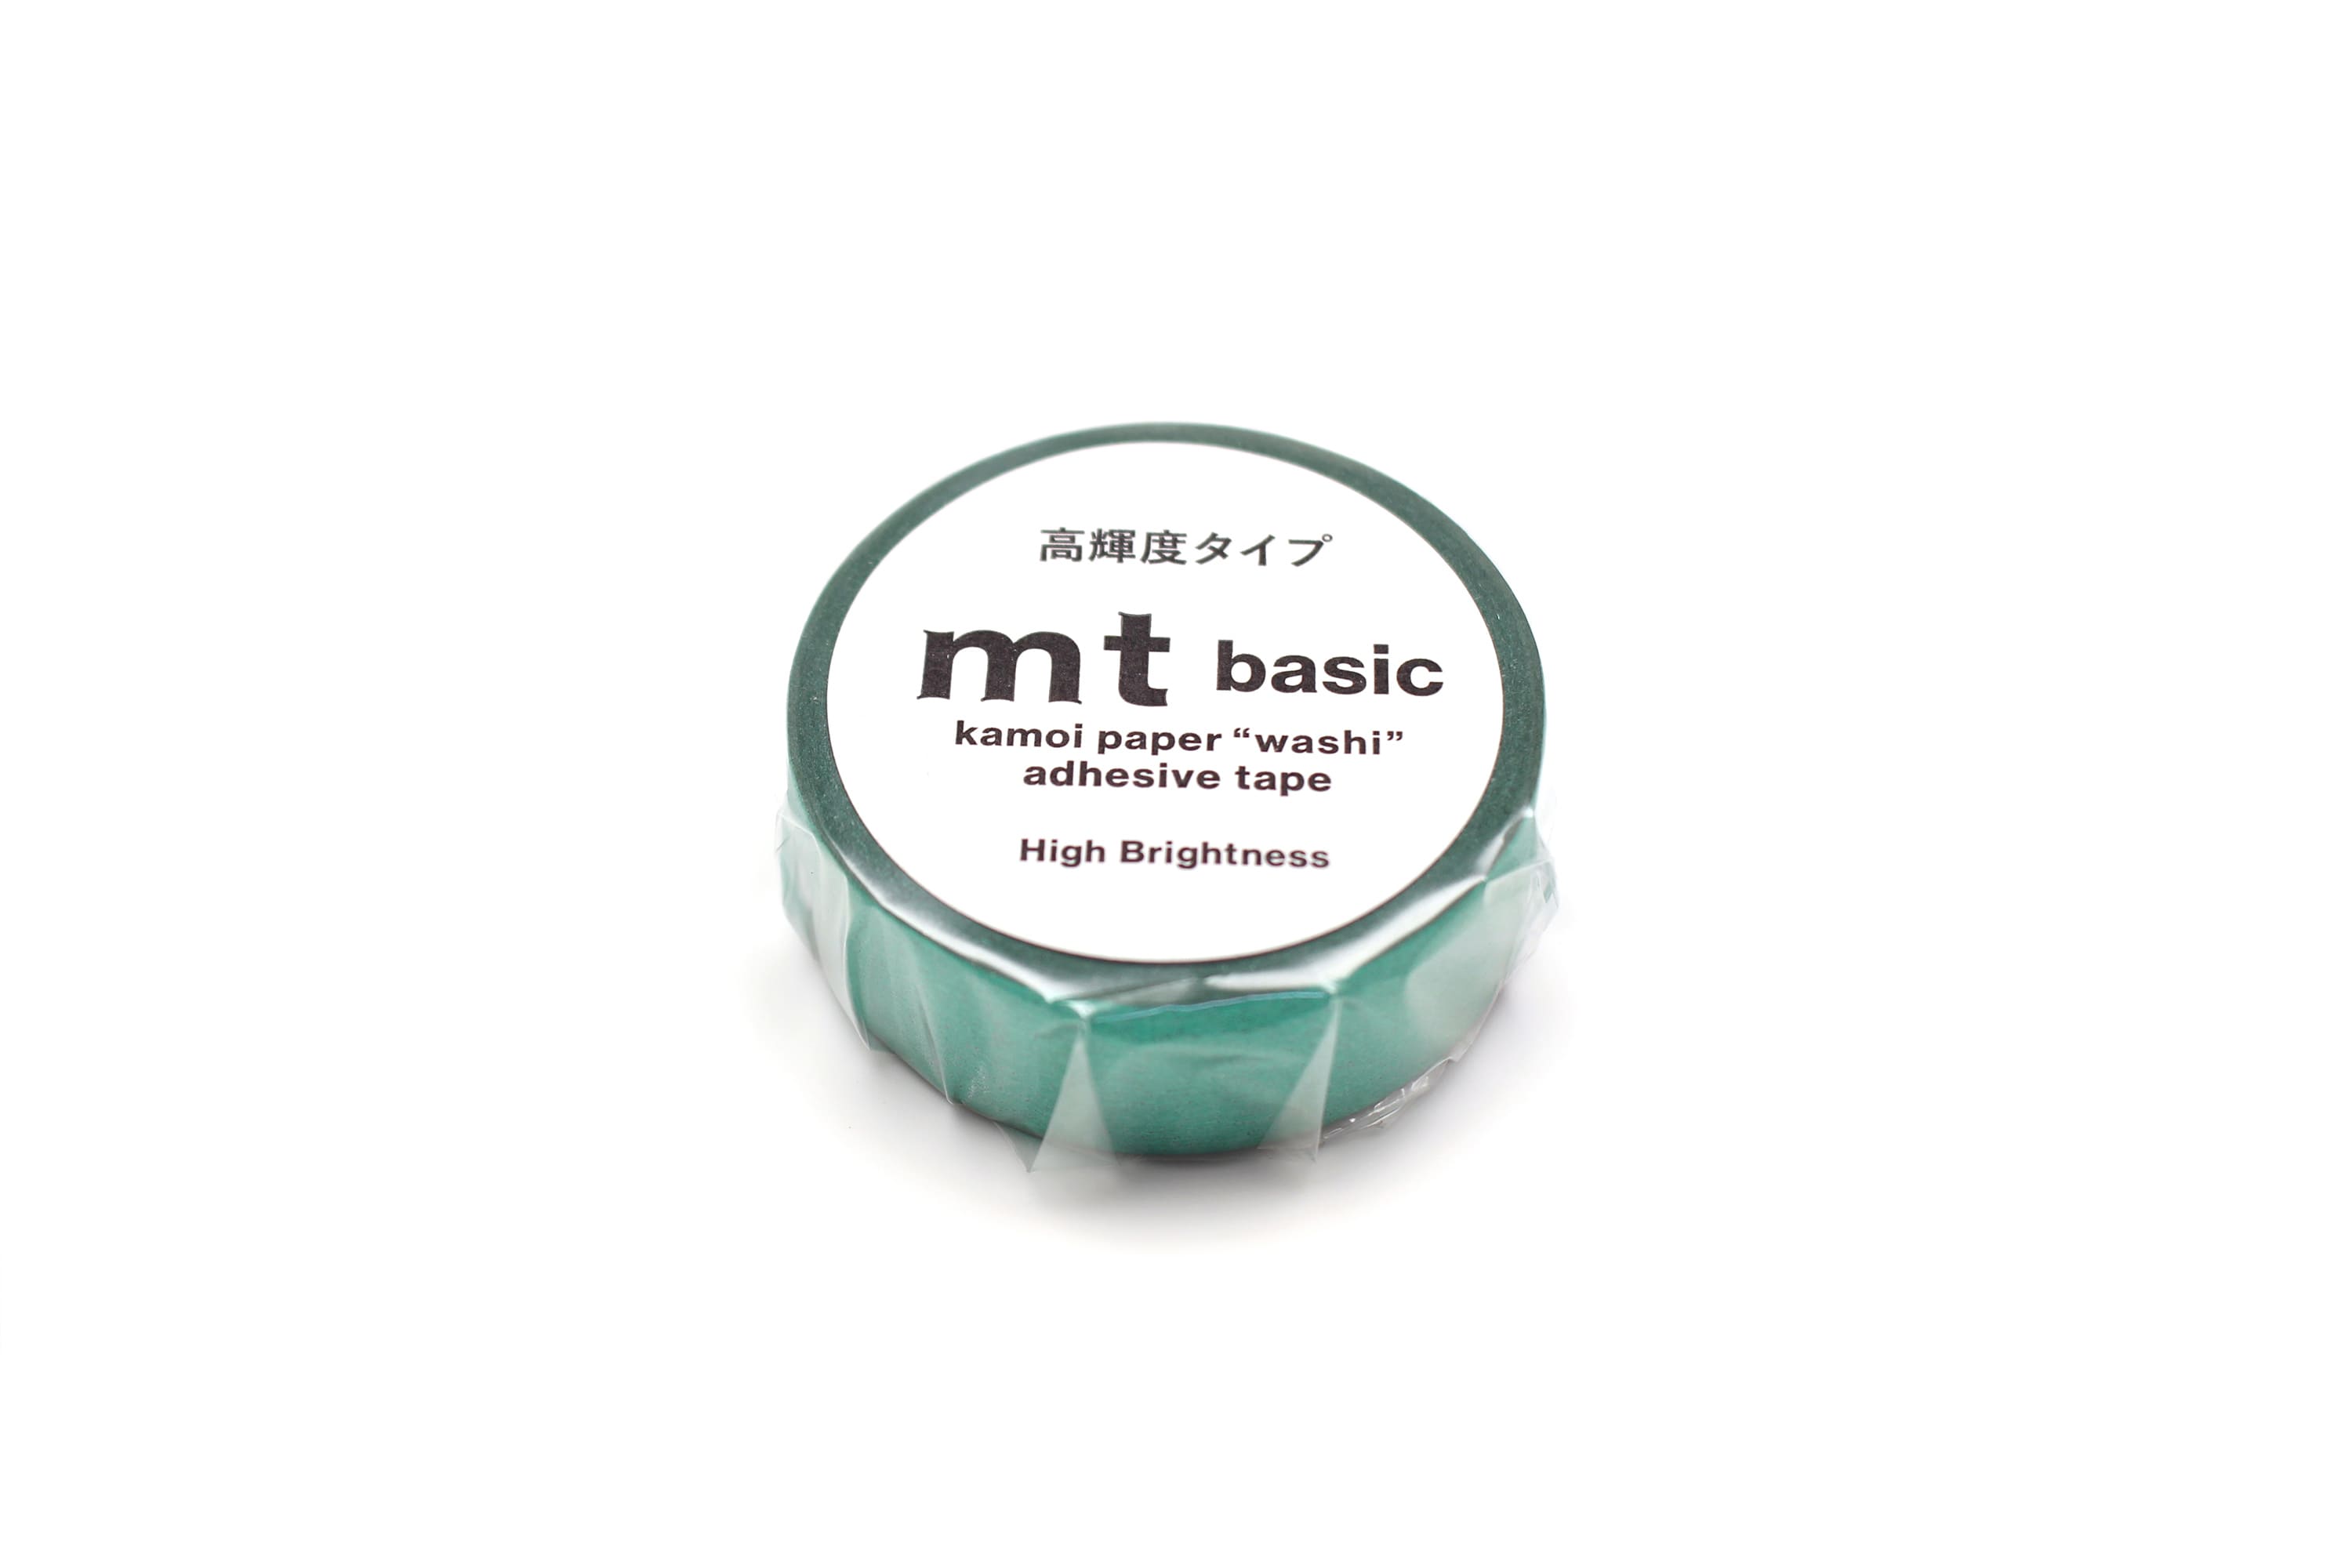 mt Basic - Green (High Brightness - Metallic Finish) - 15mm Washi Tape